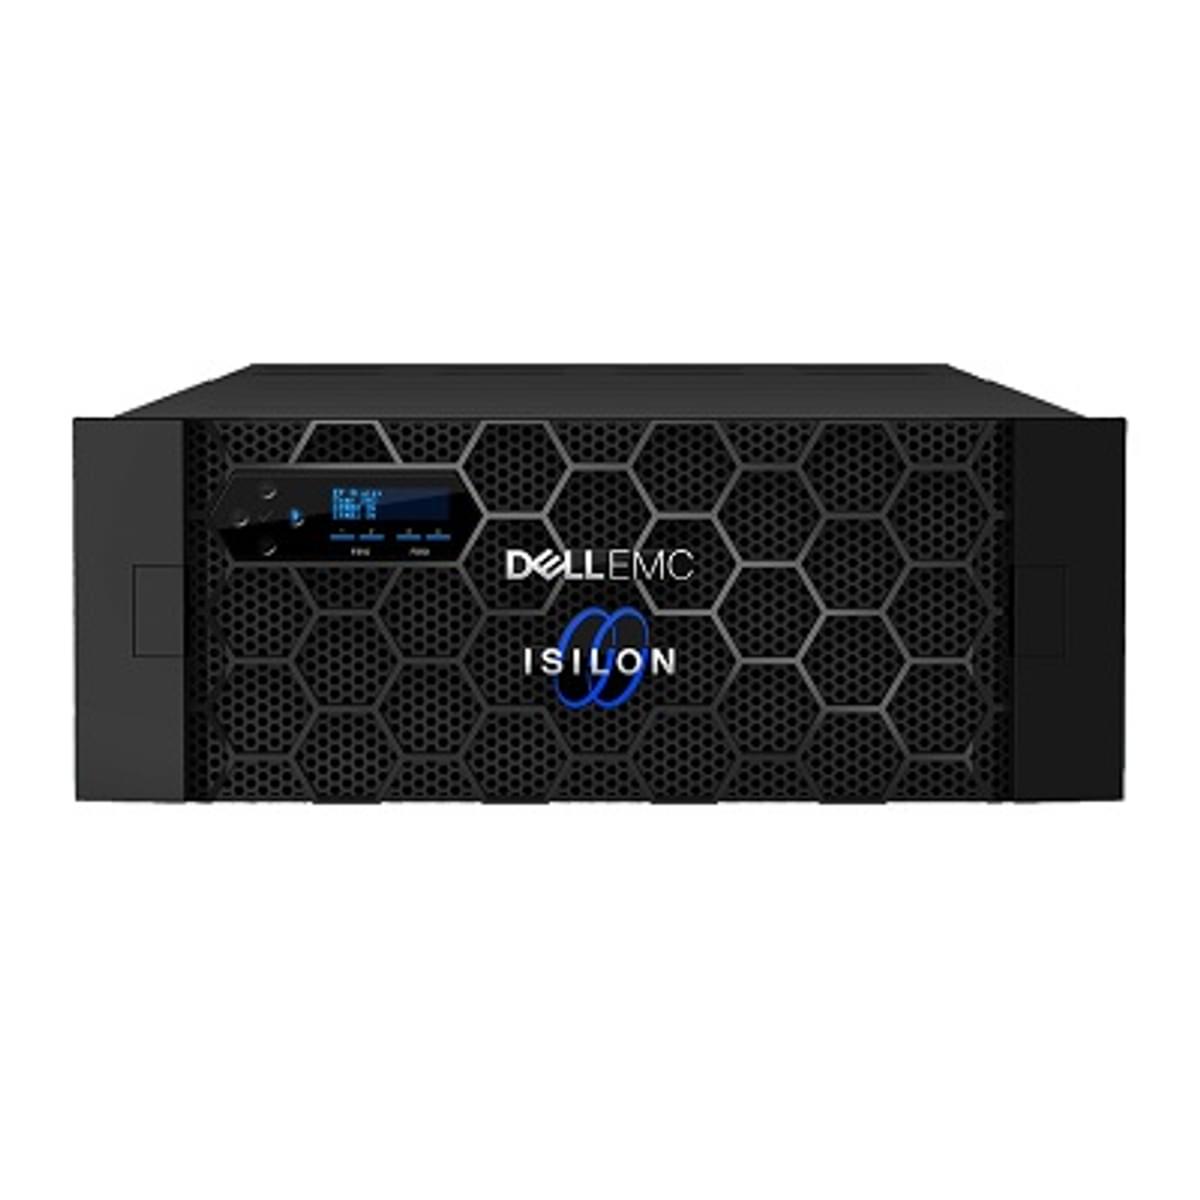 Dell EMC tweakt Isilon storage aanbod met Kubernetes support image